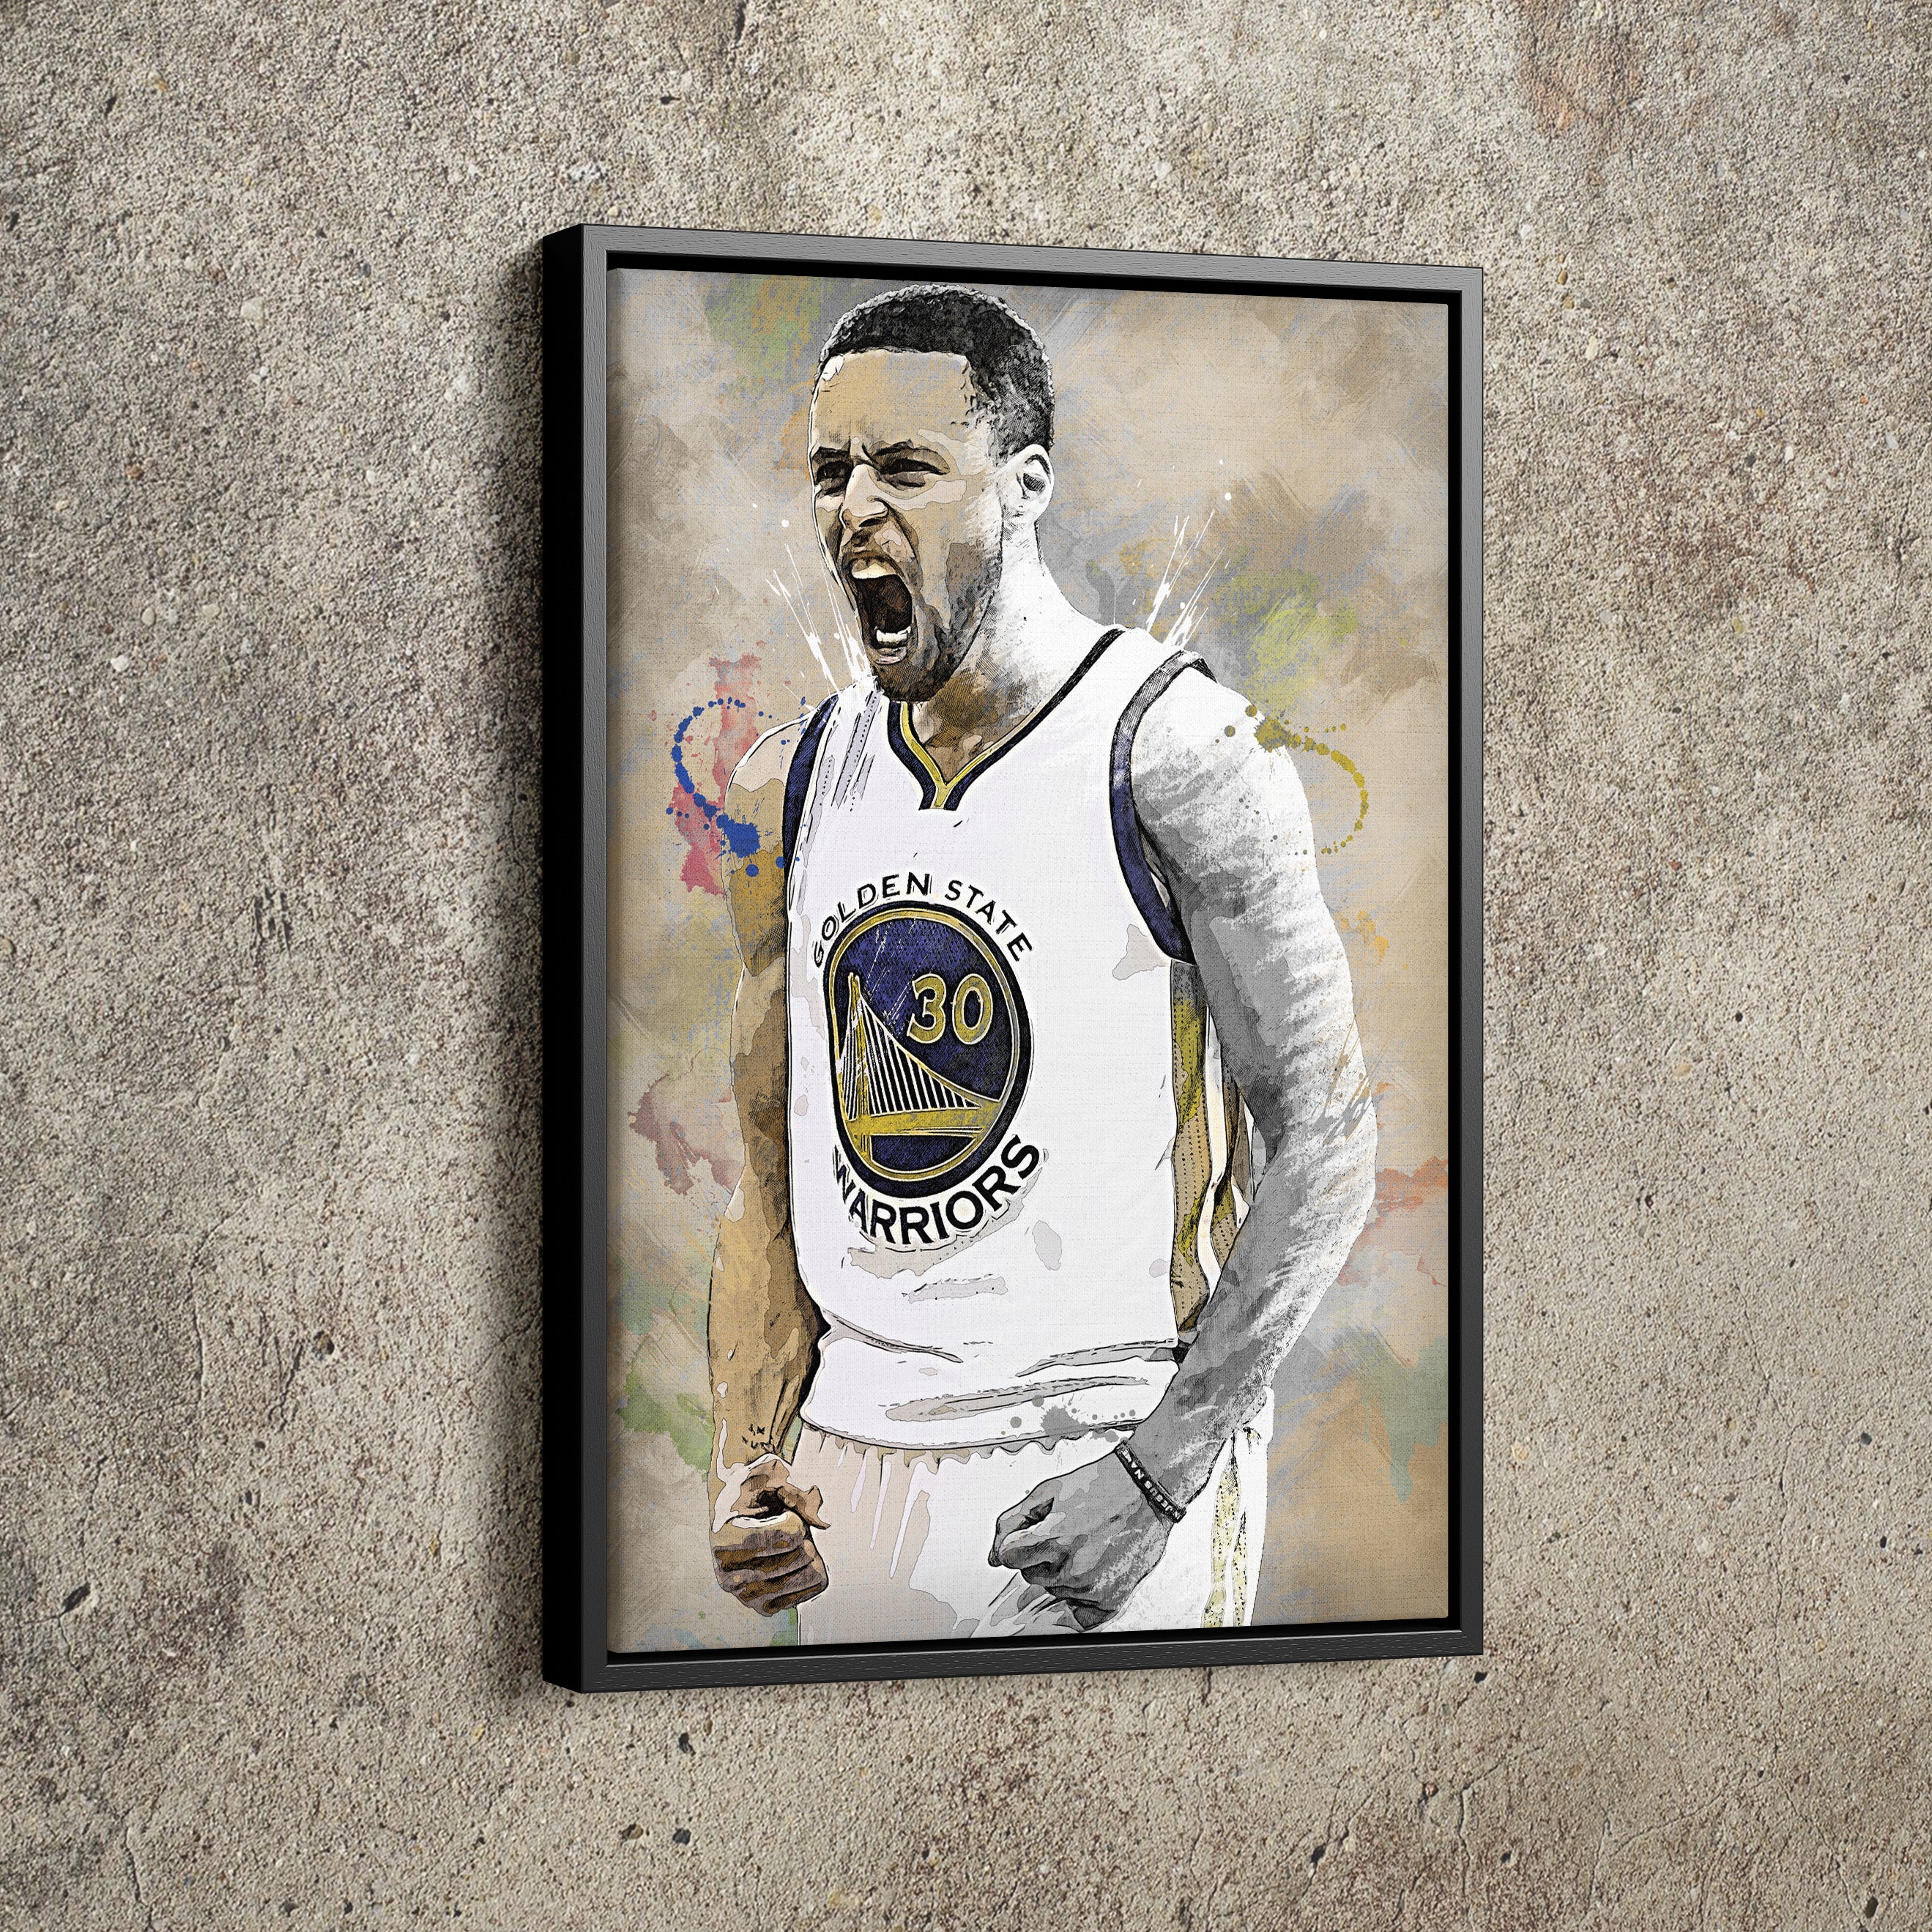 Golden State Warriors Poster Home Decor Stephen Curry Wall Art